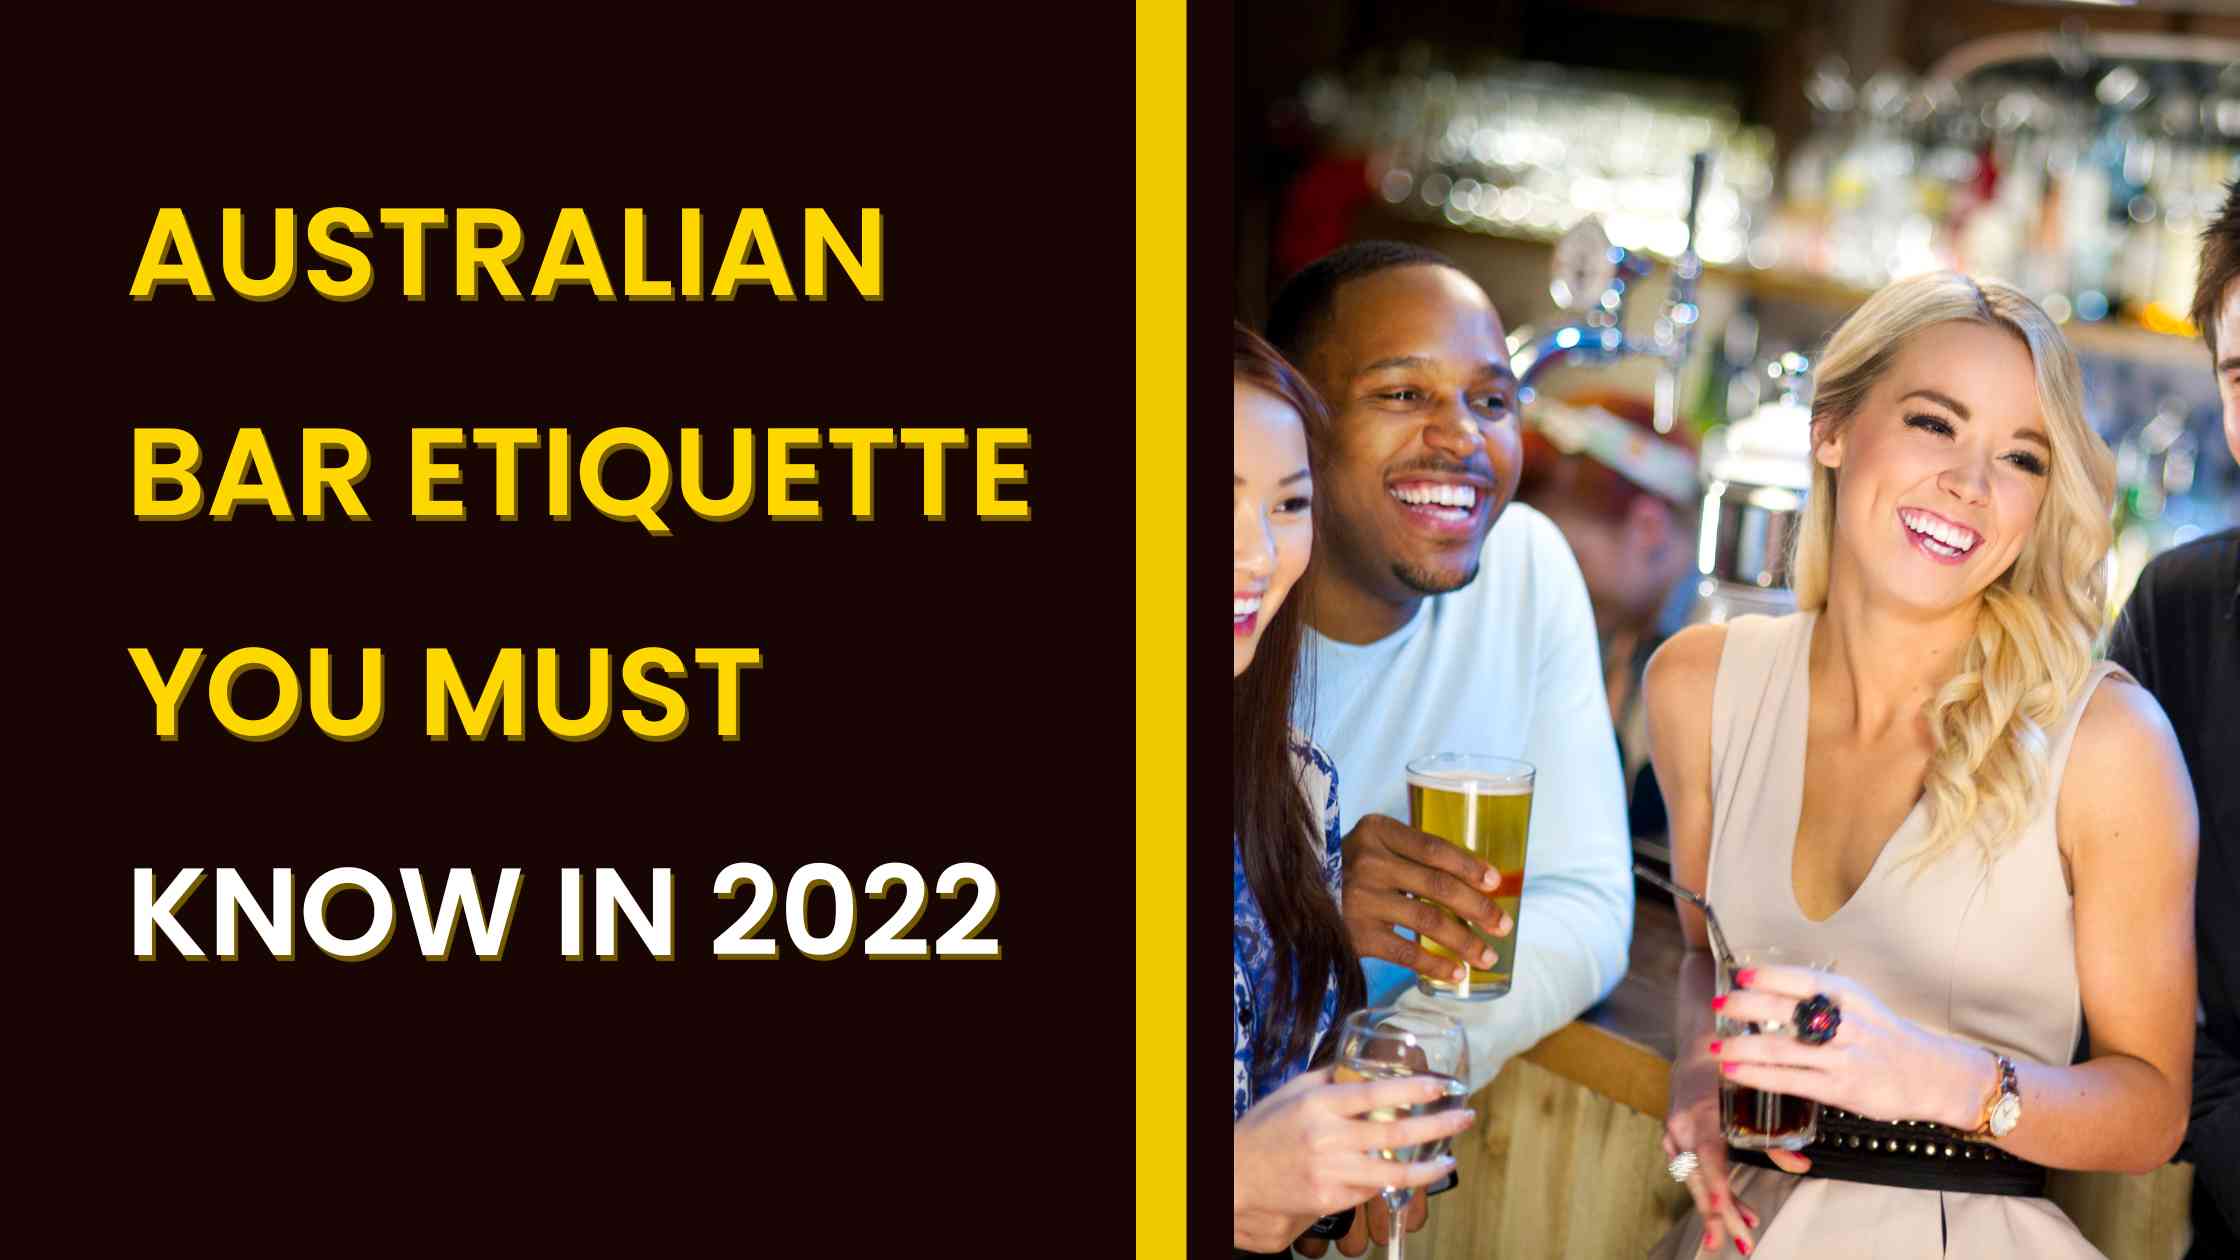 Australian bar etiquette